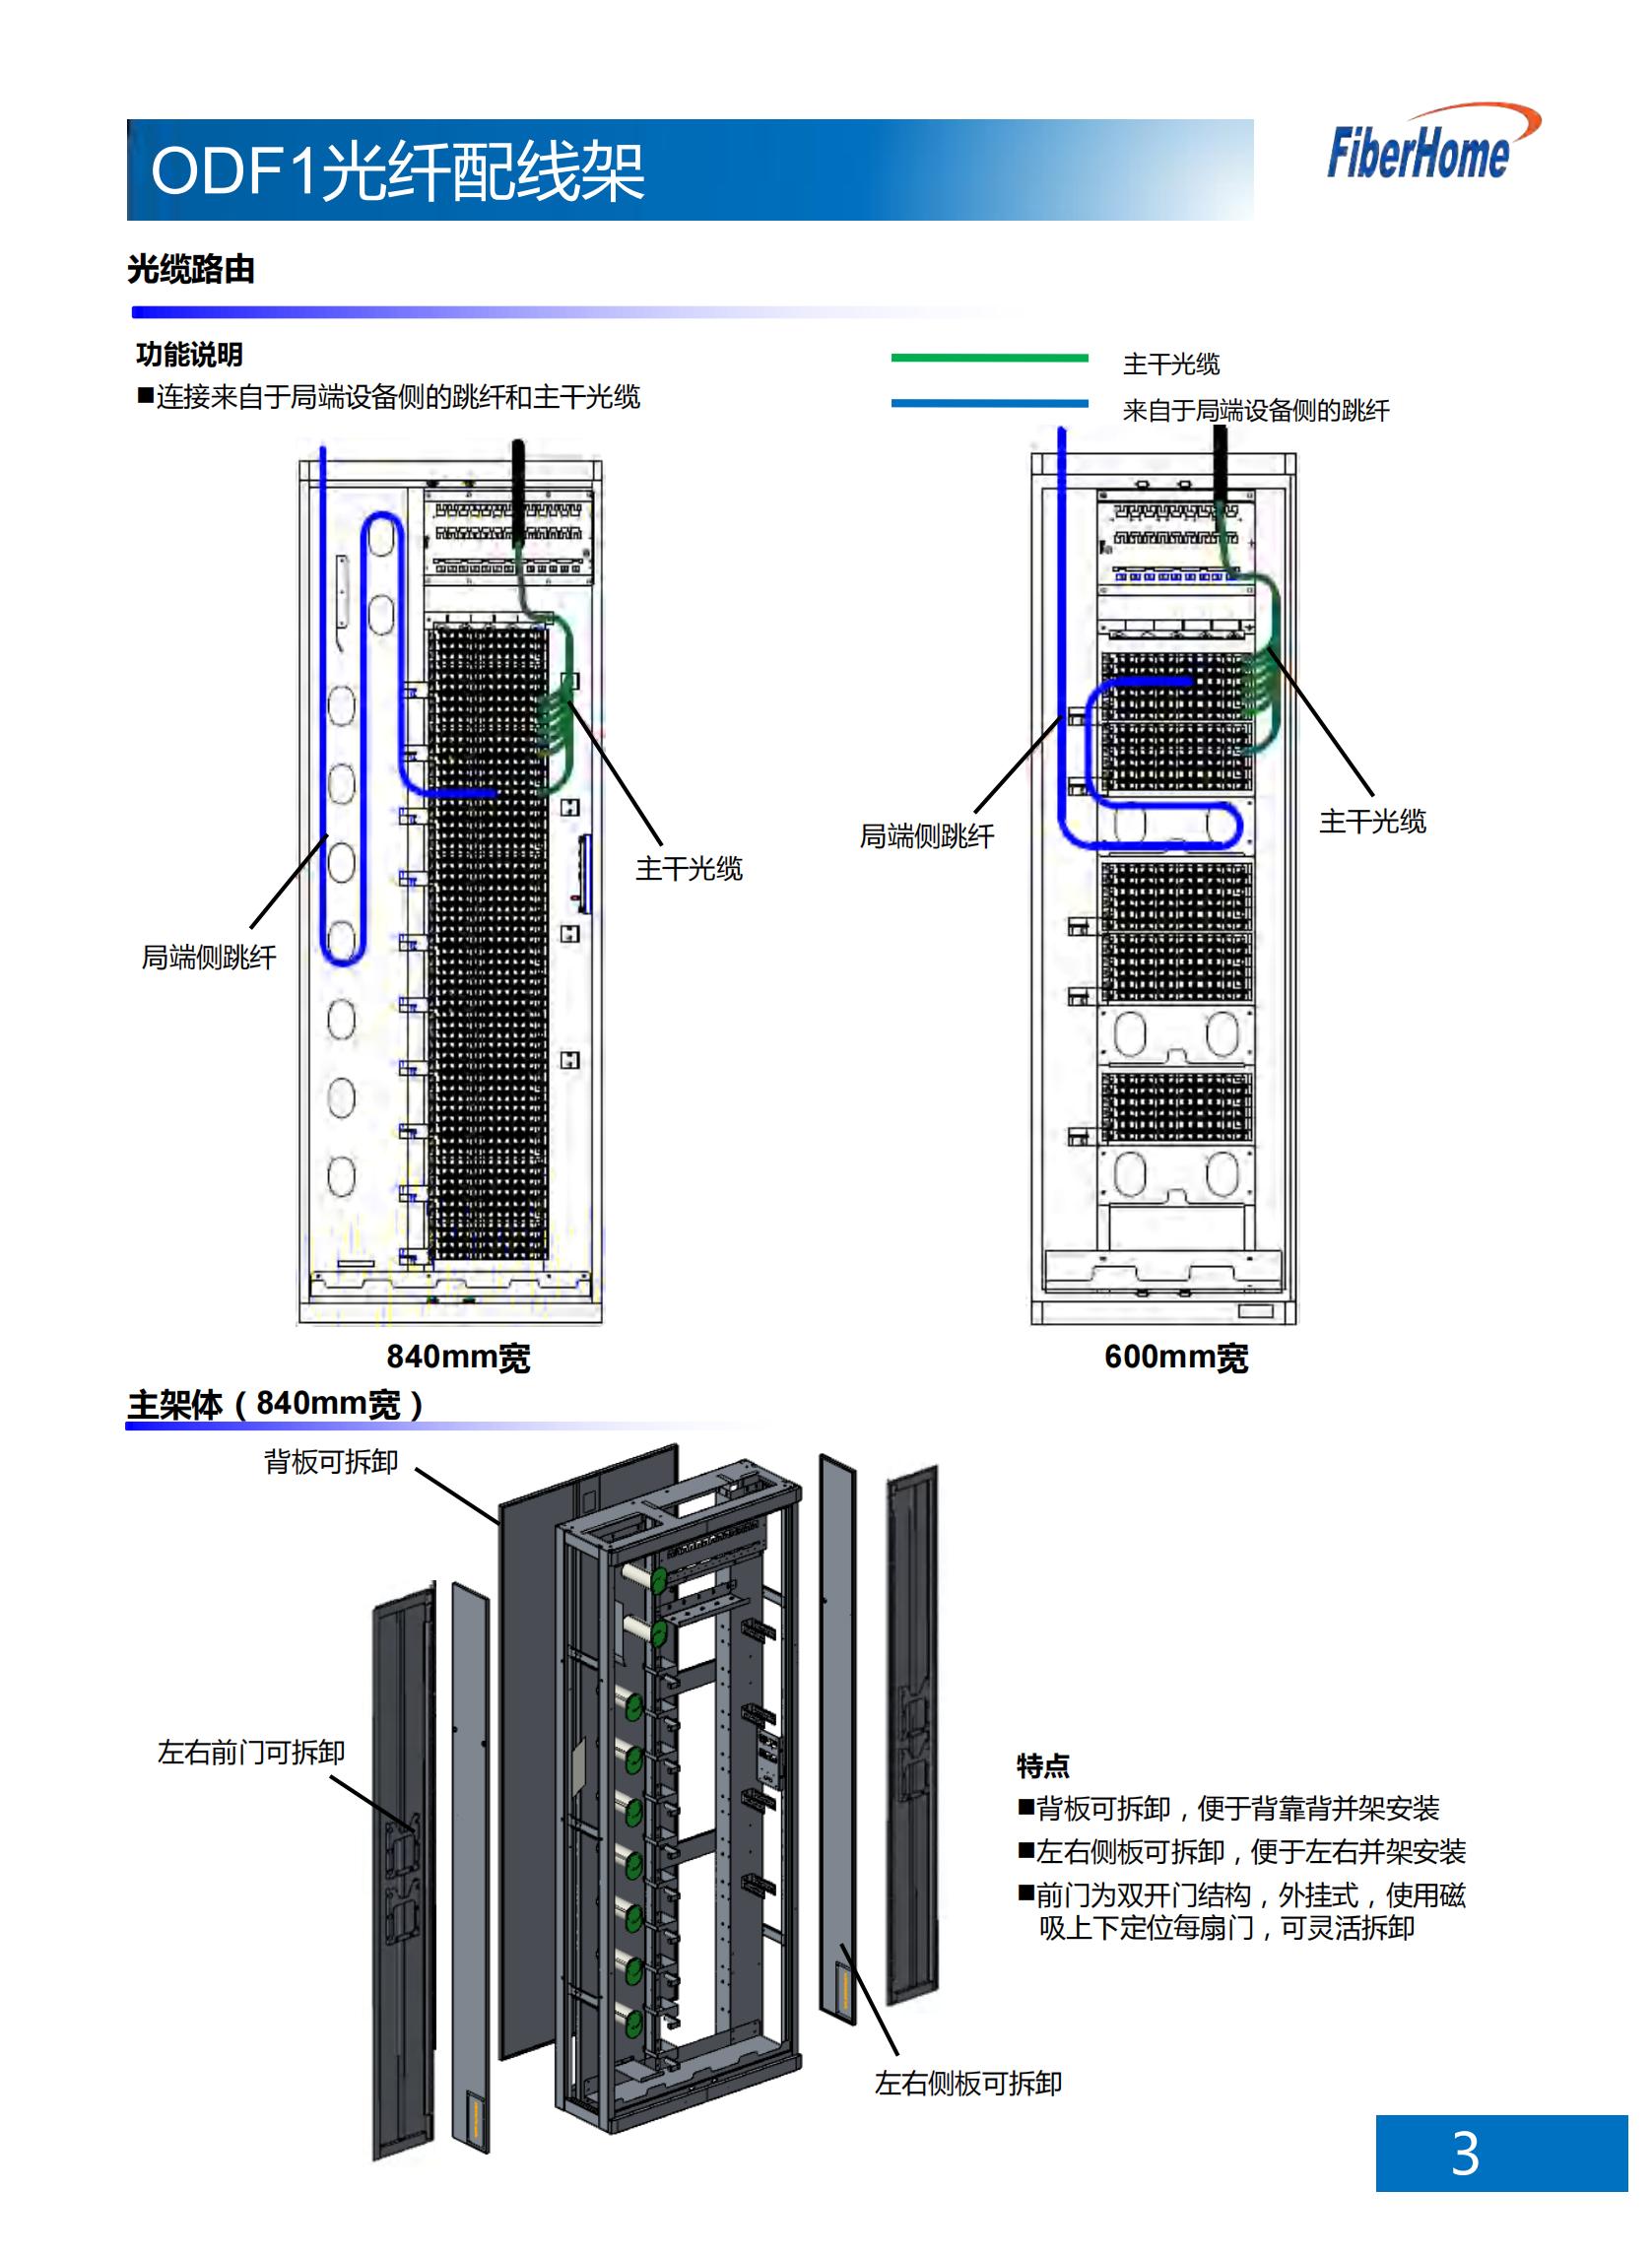 ODF101-504-A5-SC ODF optical fiber distribution frame (504-core floor-standing all include 12-core SC fusion integration unit)